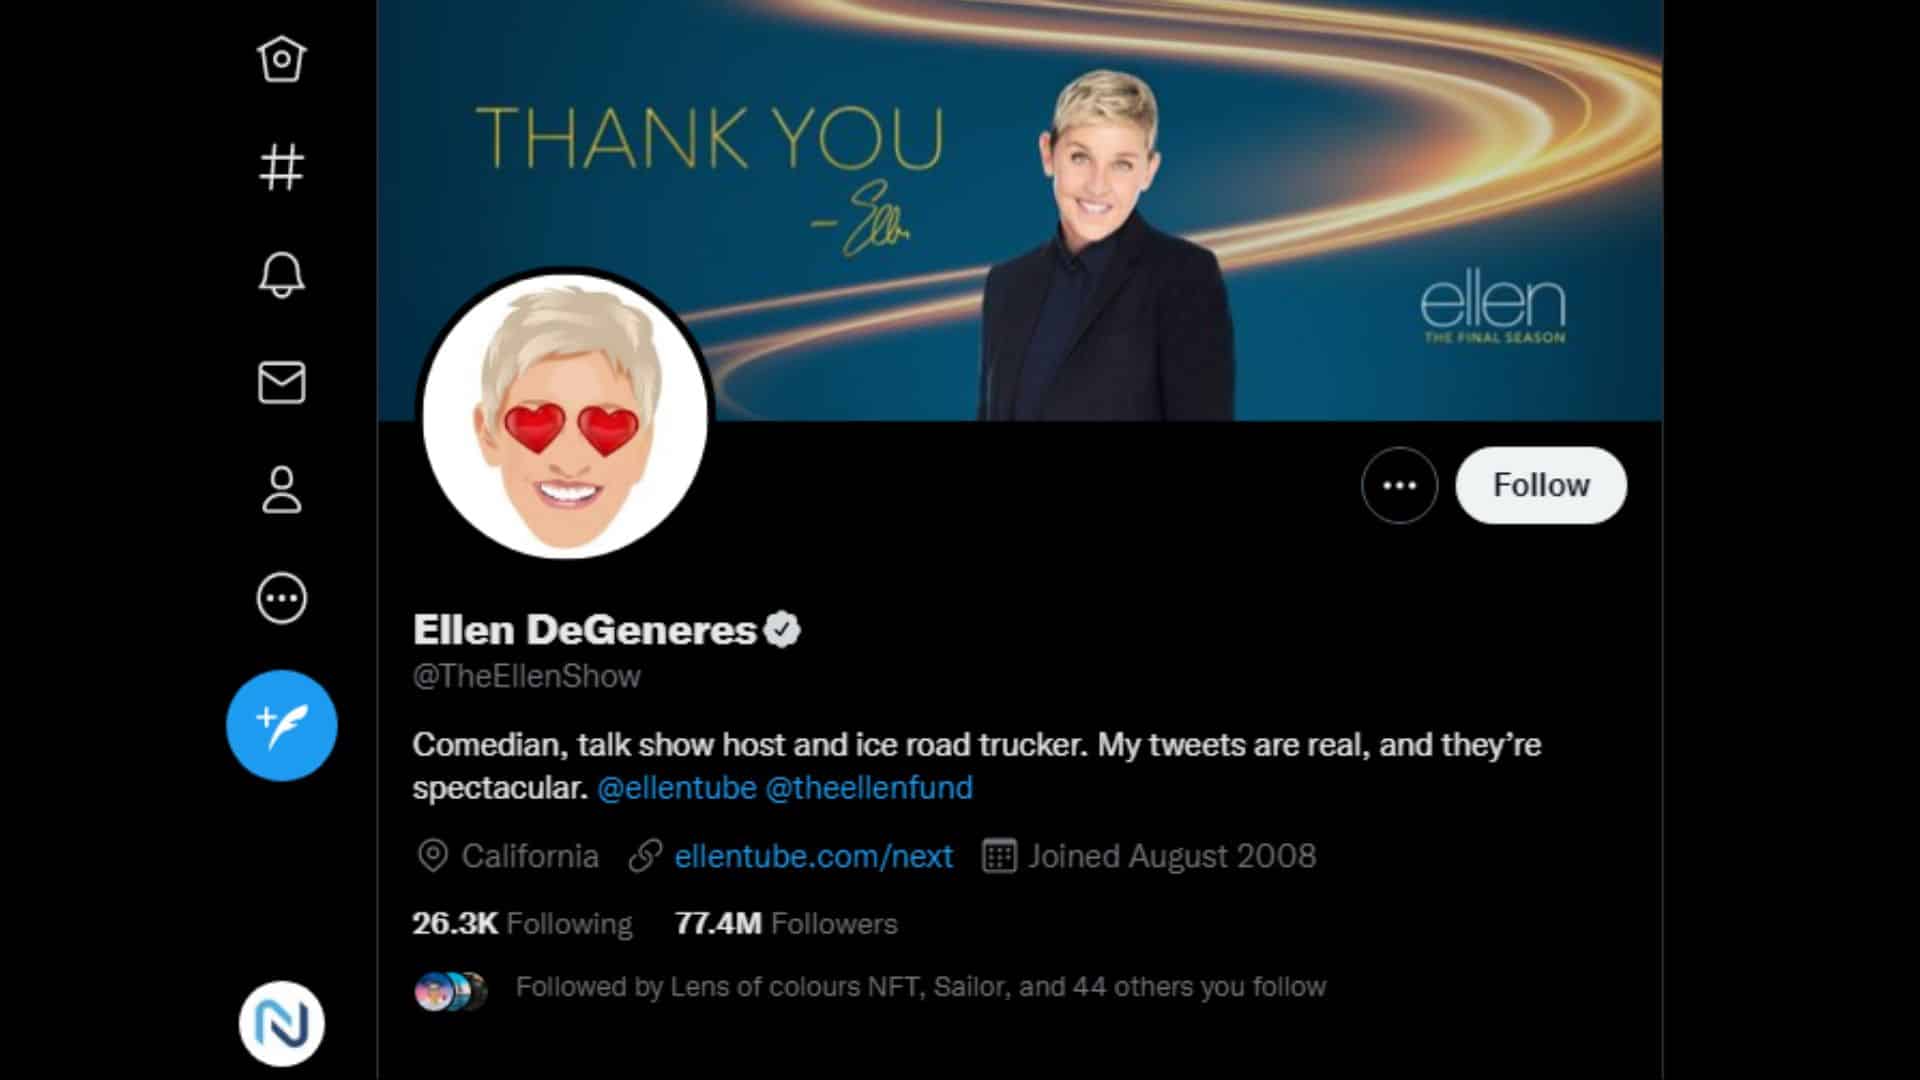 Ellen DeGeneres Most-Followed Twitter Account